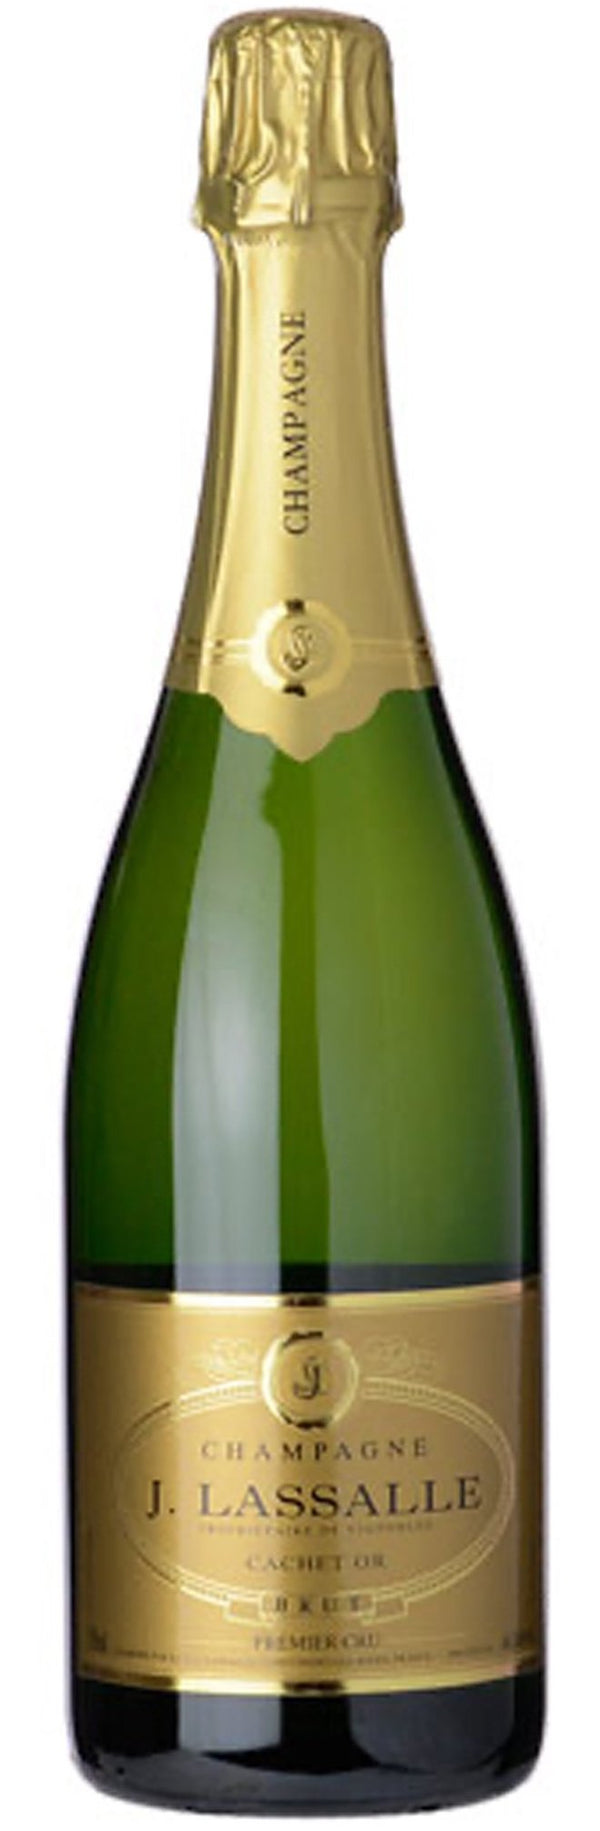 Champagne J. Lassalle Cachet Or Brut Premier Cru 750ml